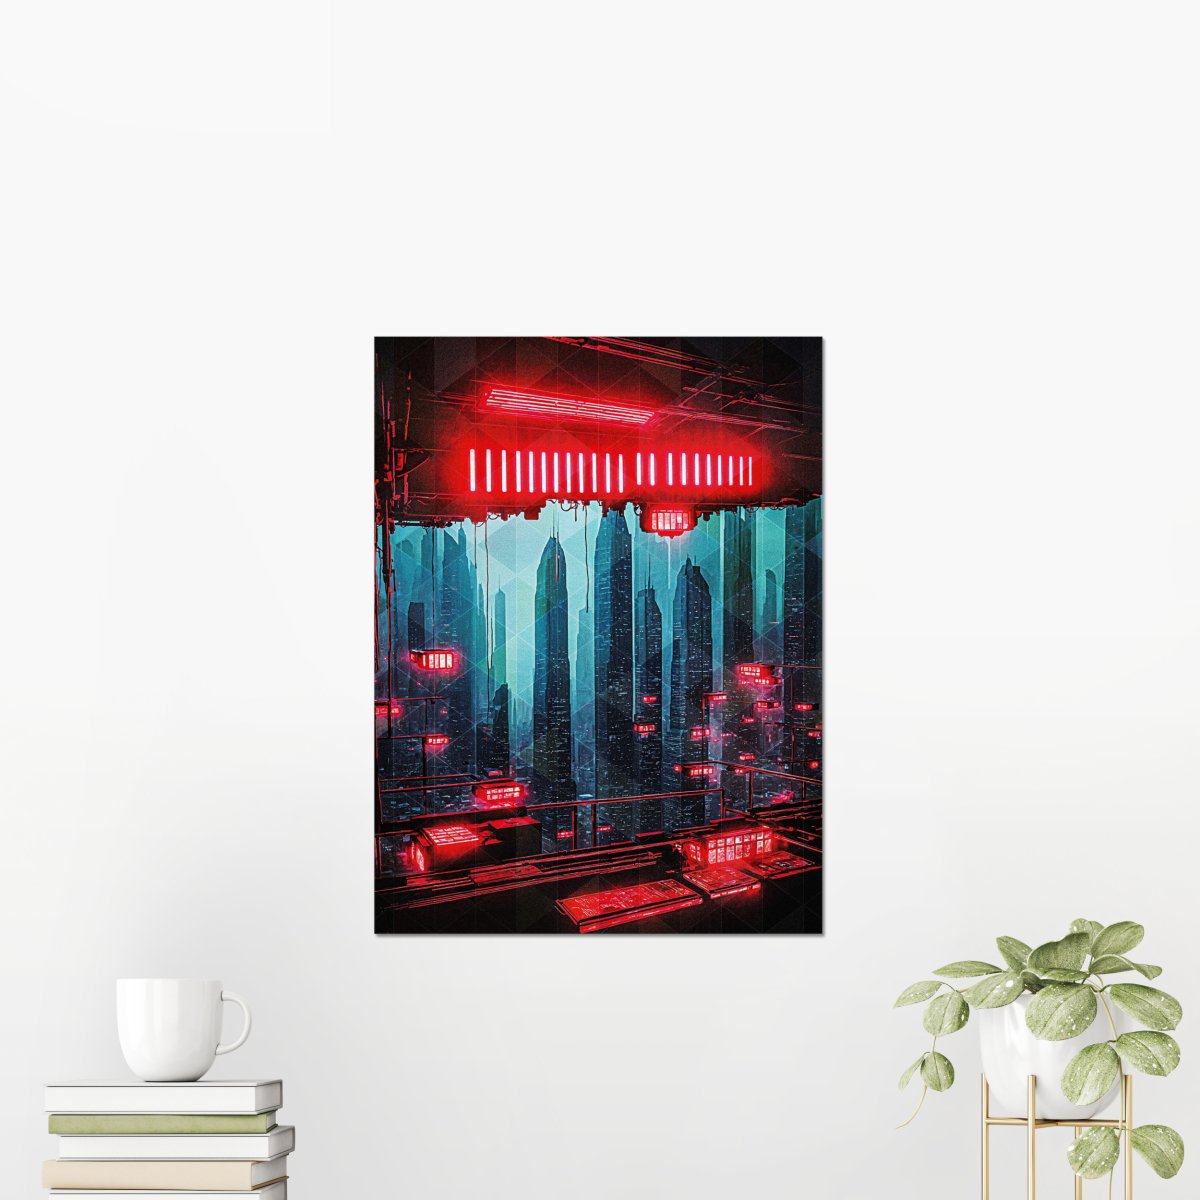 Neon future - Art print - Poster - Ever colorful